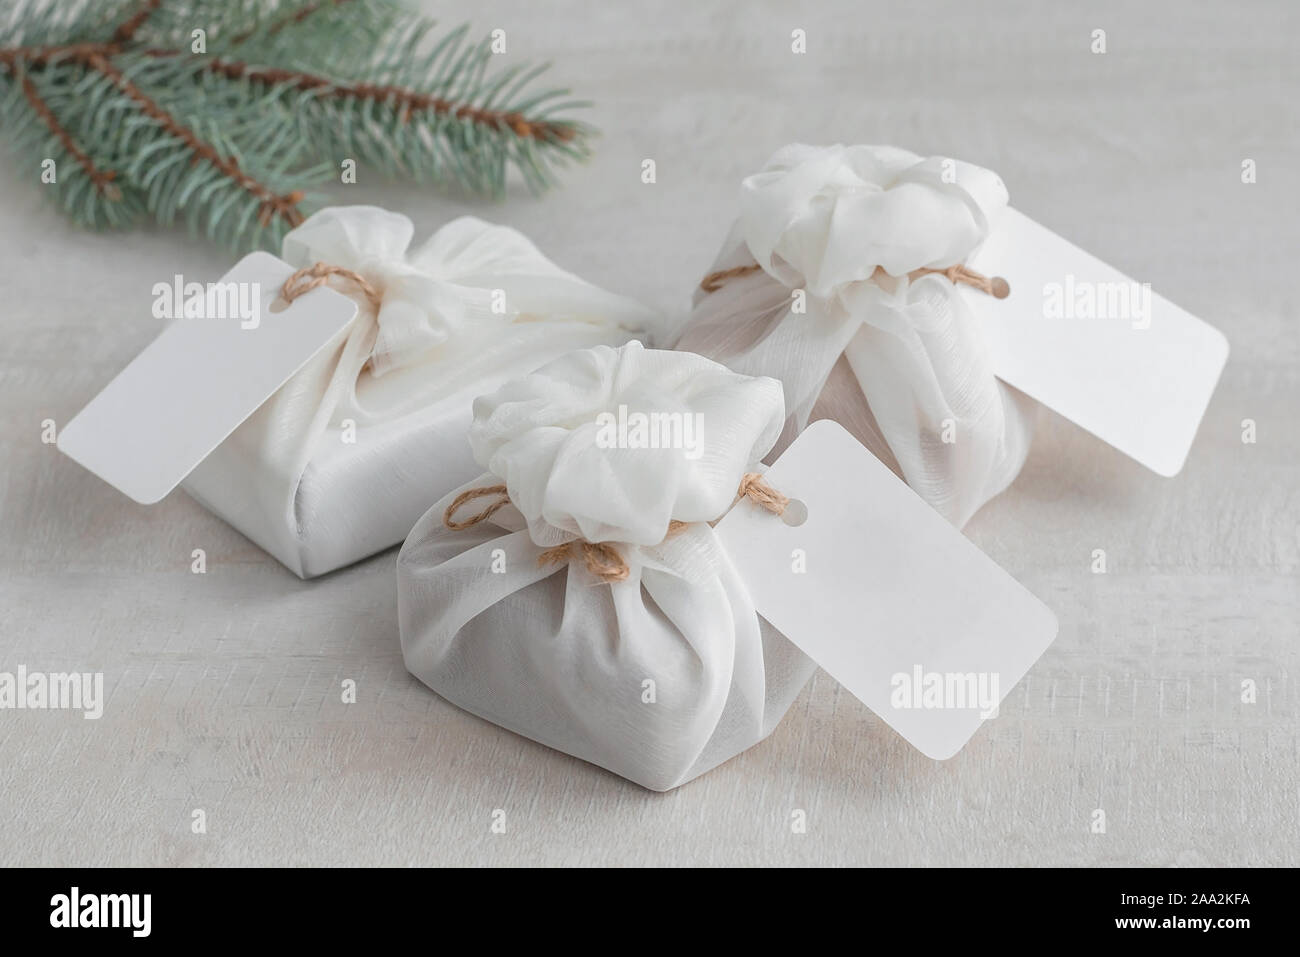 Regalo de navidad envuelto con tela furoshiki blanco con etiquetas. Eco friendly regalo. Foto de stock